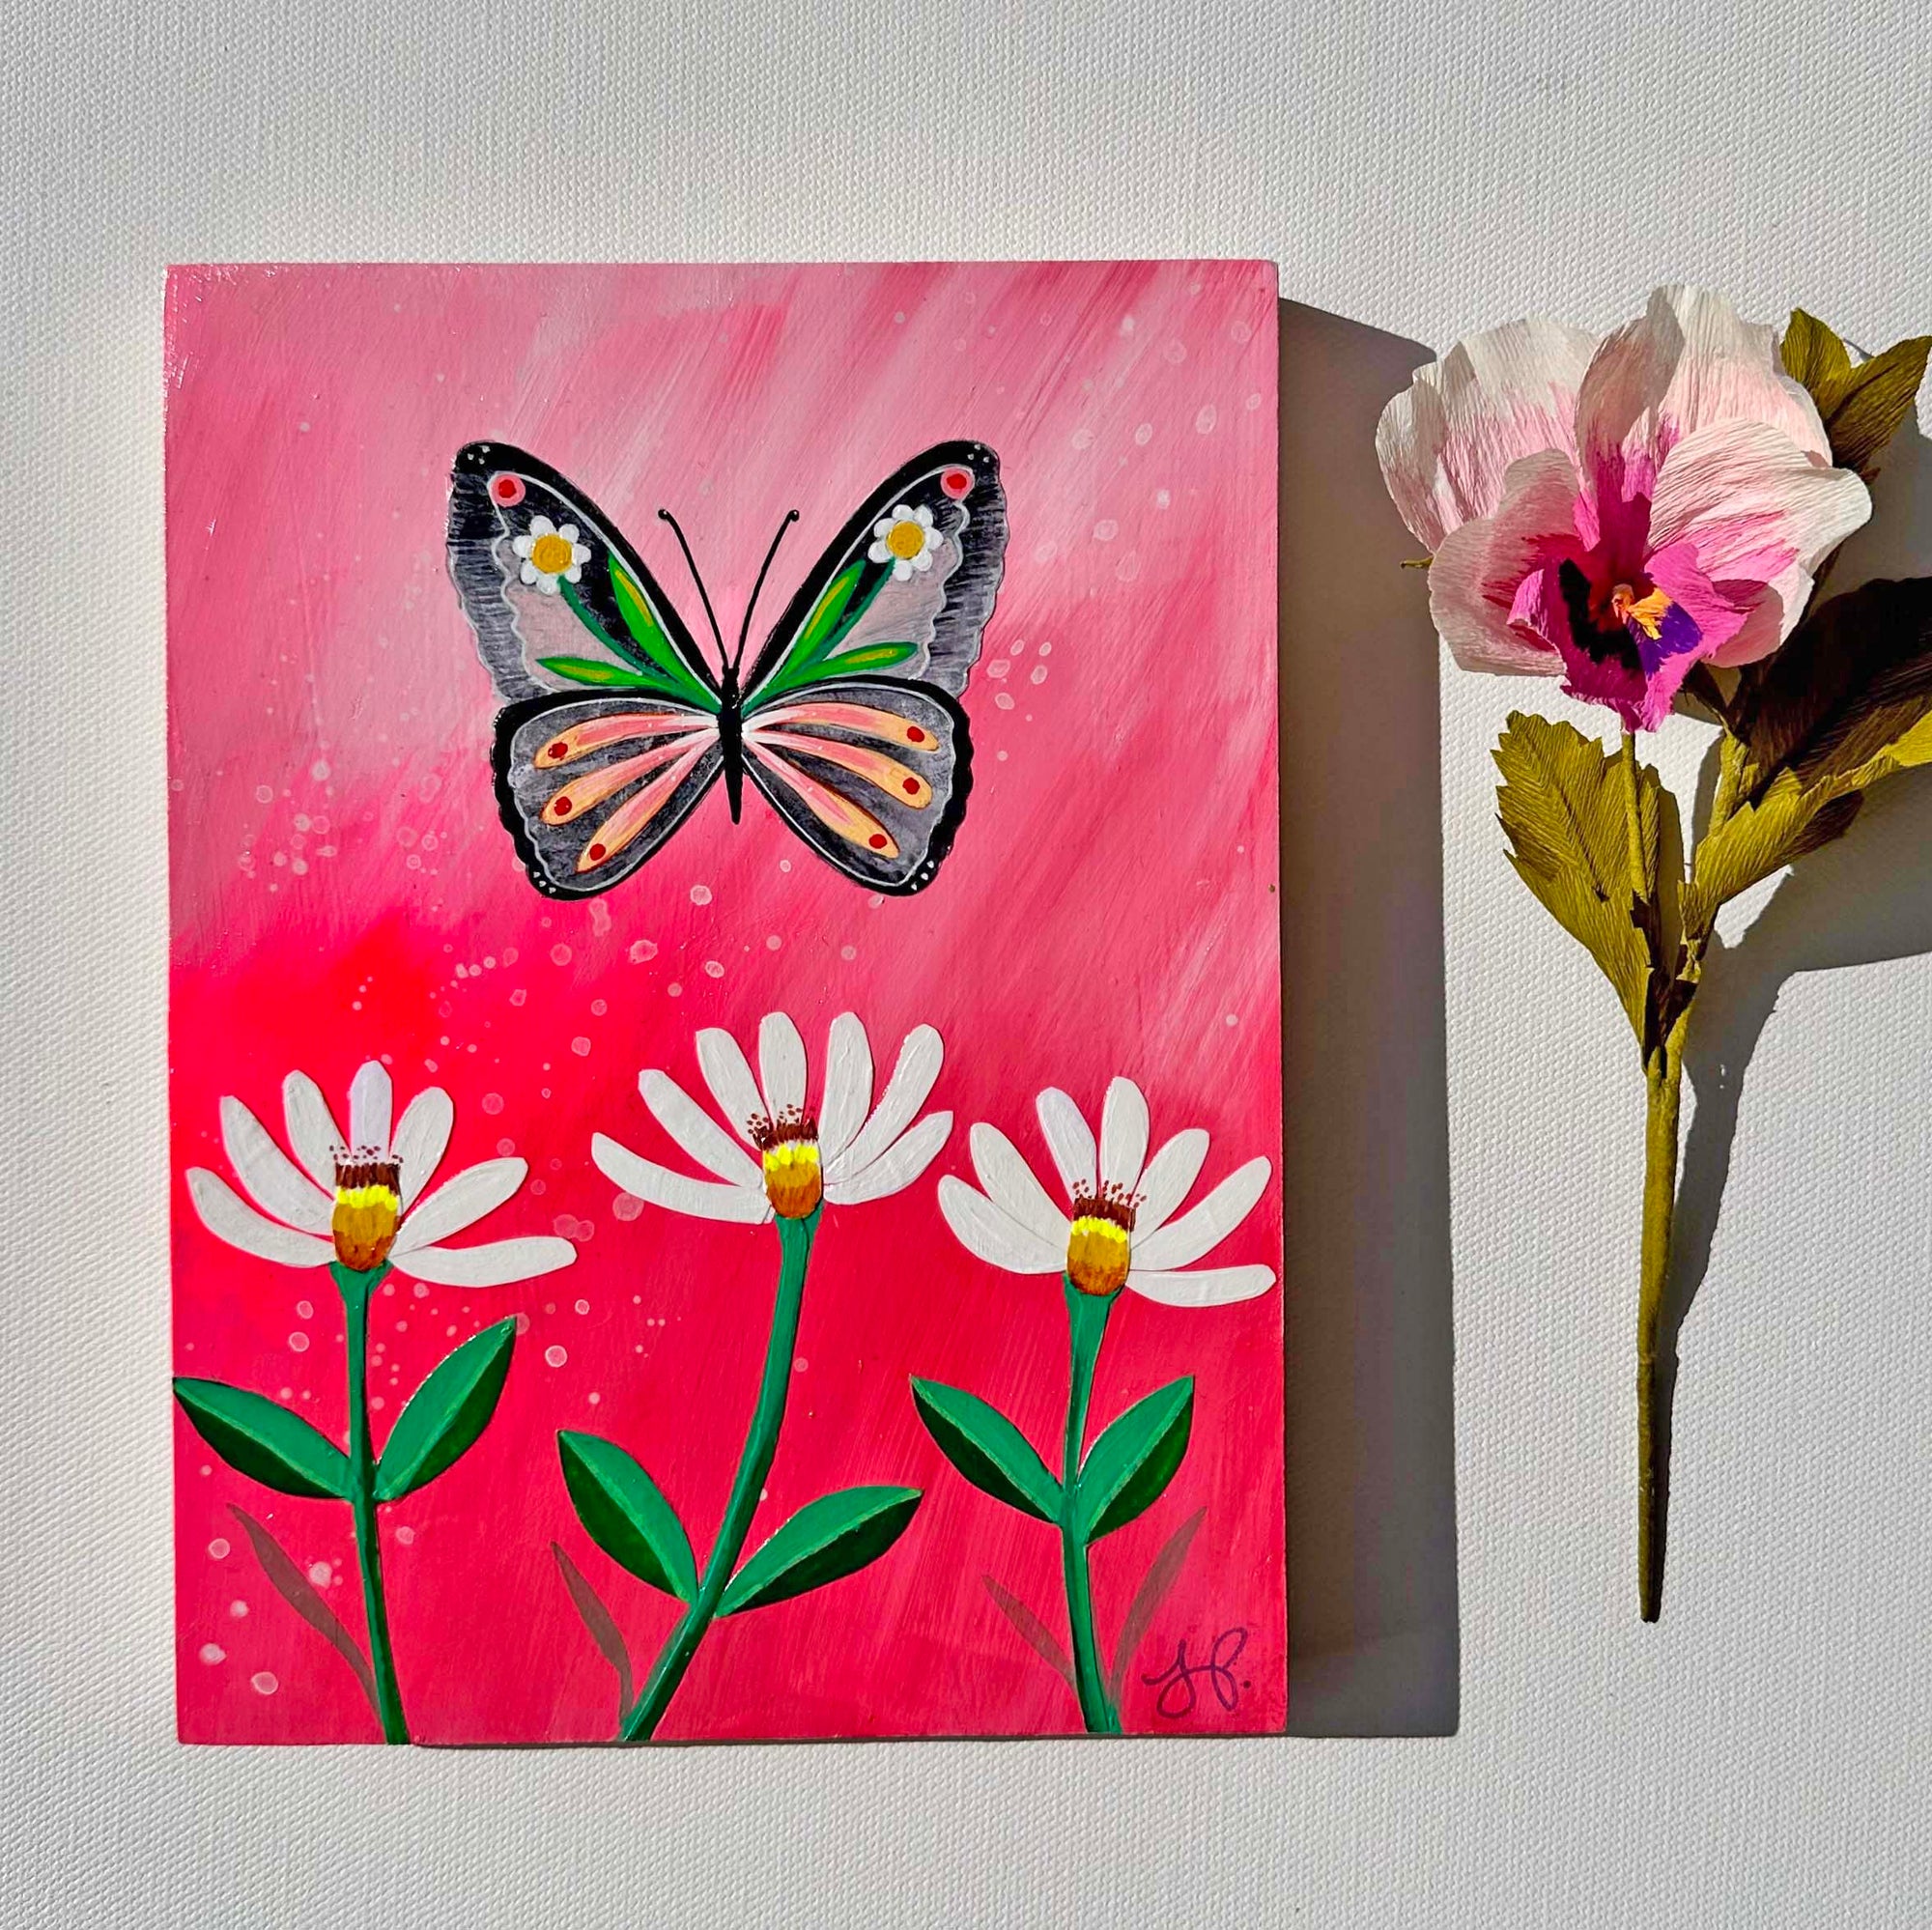 Butterfly Garden Pink Sky (6x8) Original Mixed Media Painting